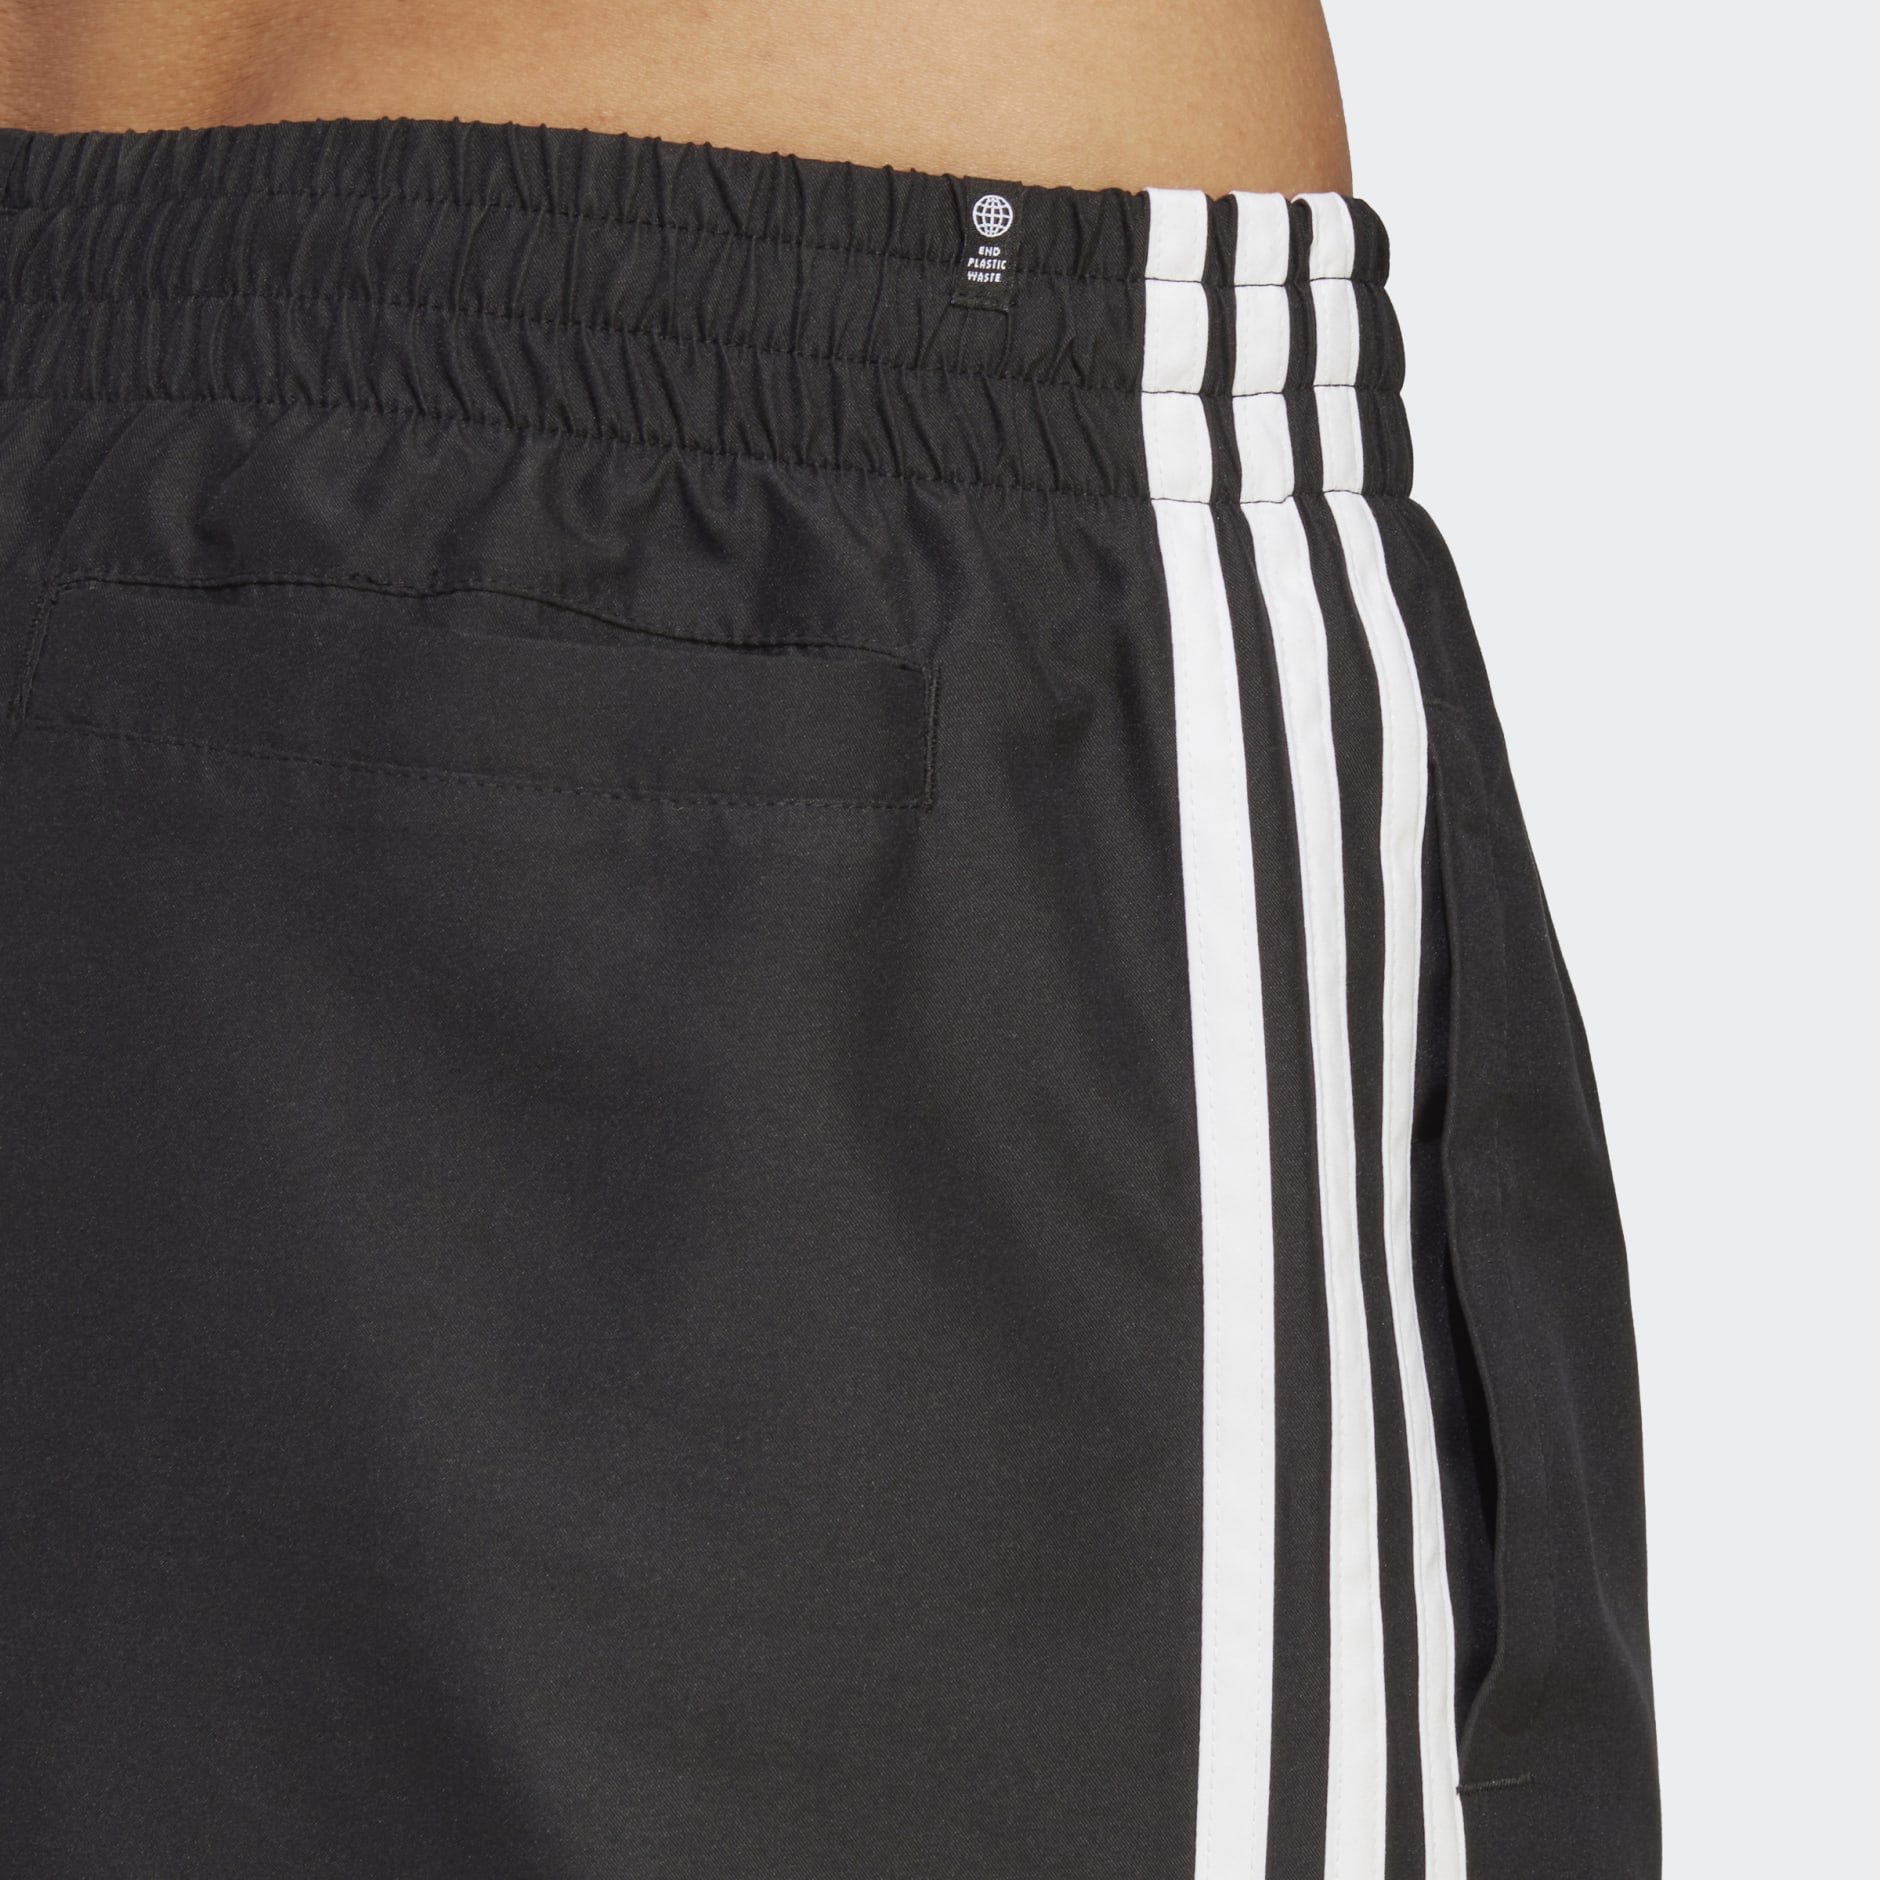 adidas Adicolor 3-Stripes Swim Shorts - Black, Men's Swim